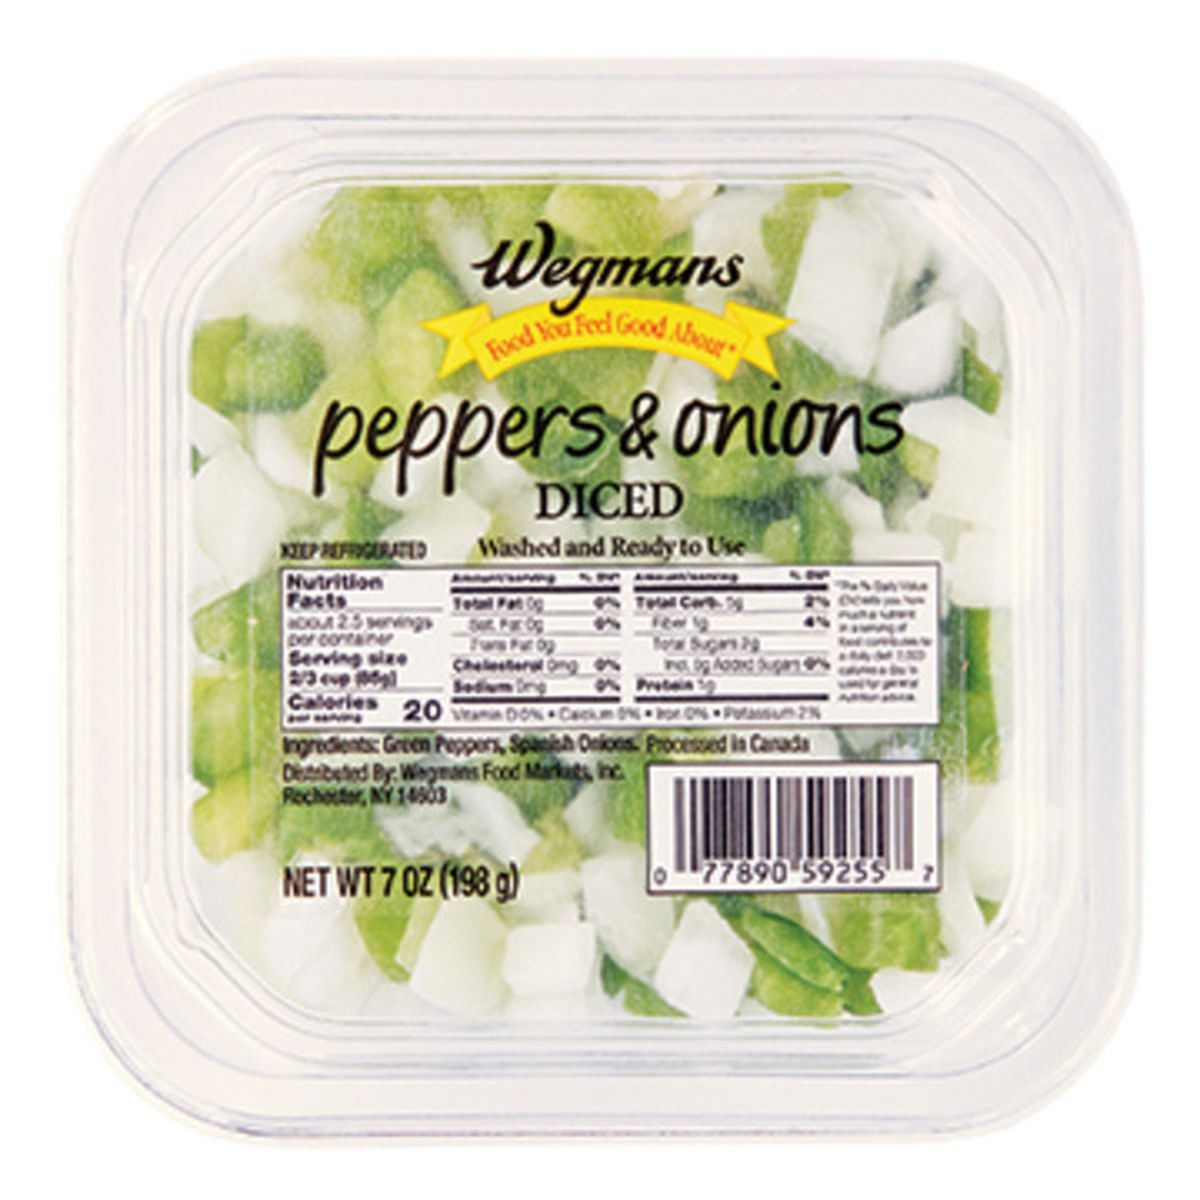 Calories in Wegmans Diced Green Peppers & Onions